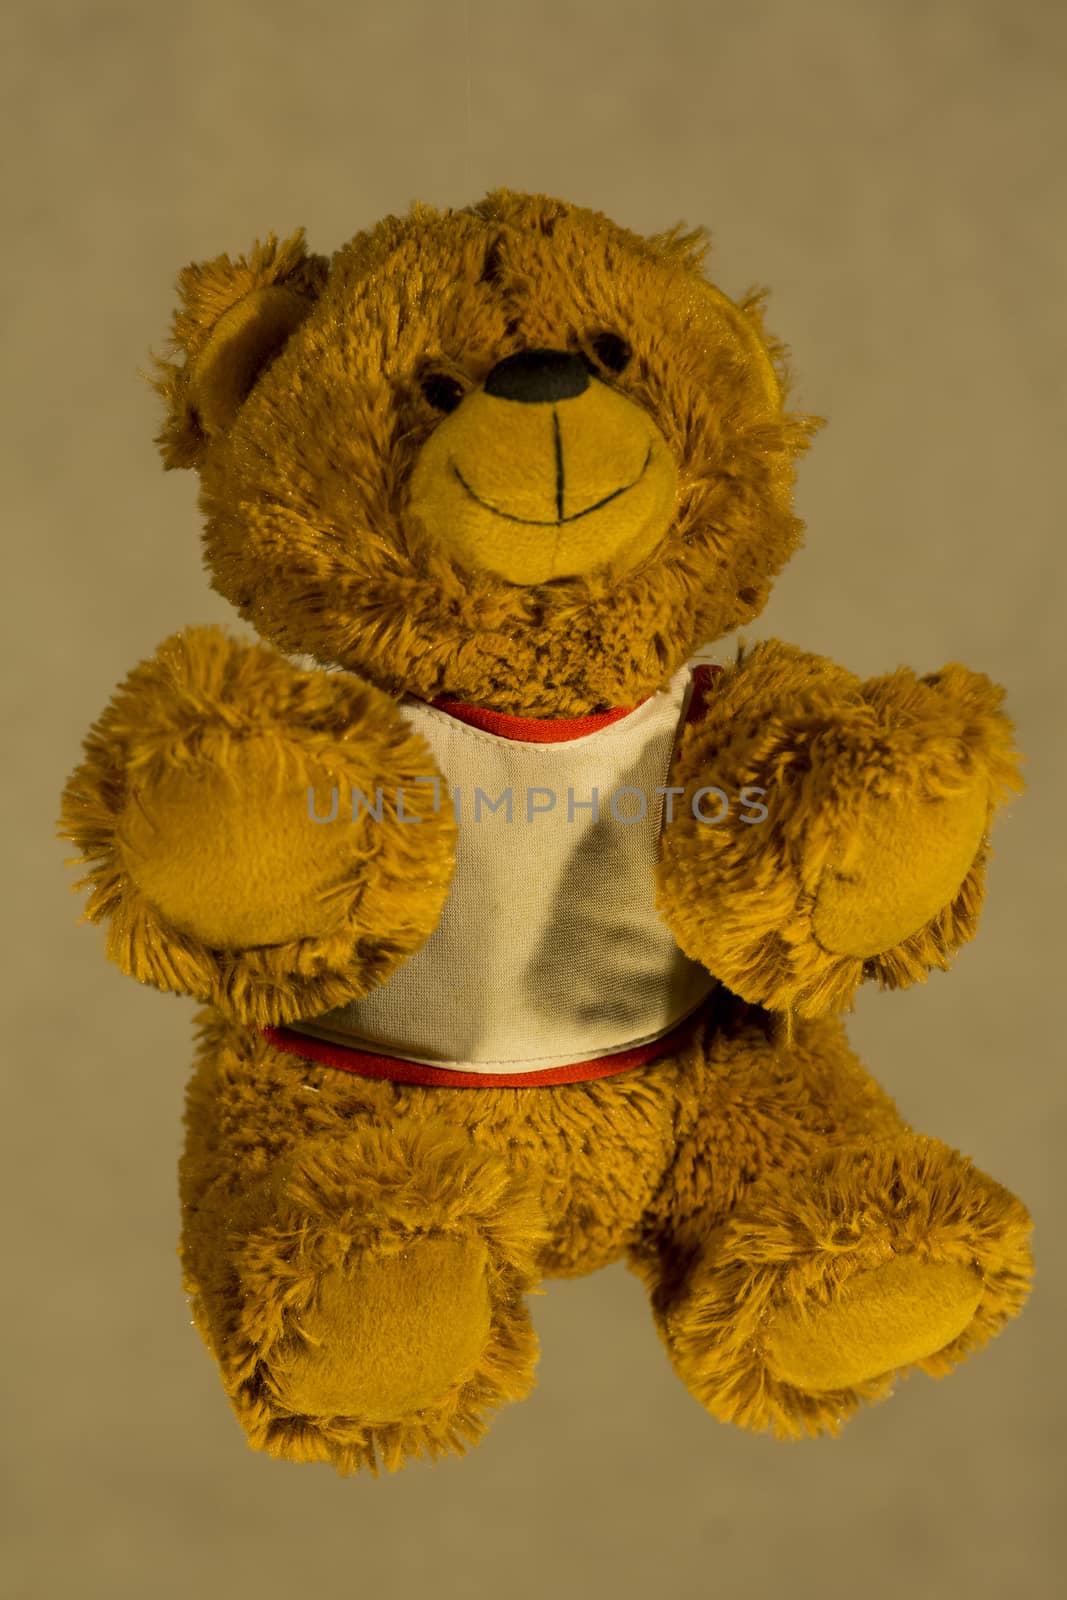 children's toy Teddy bear on a grey background